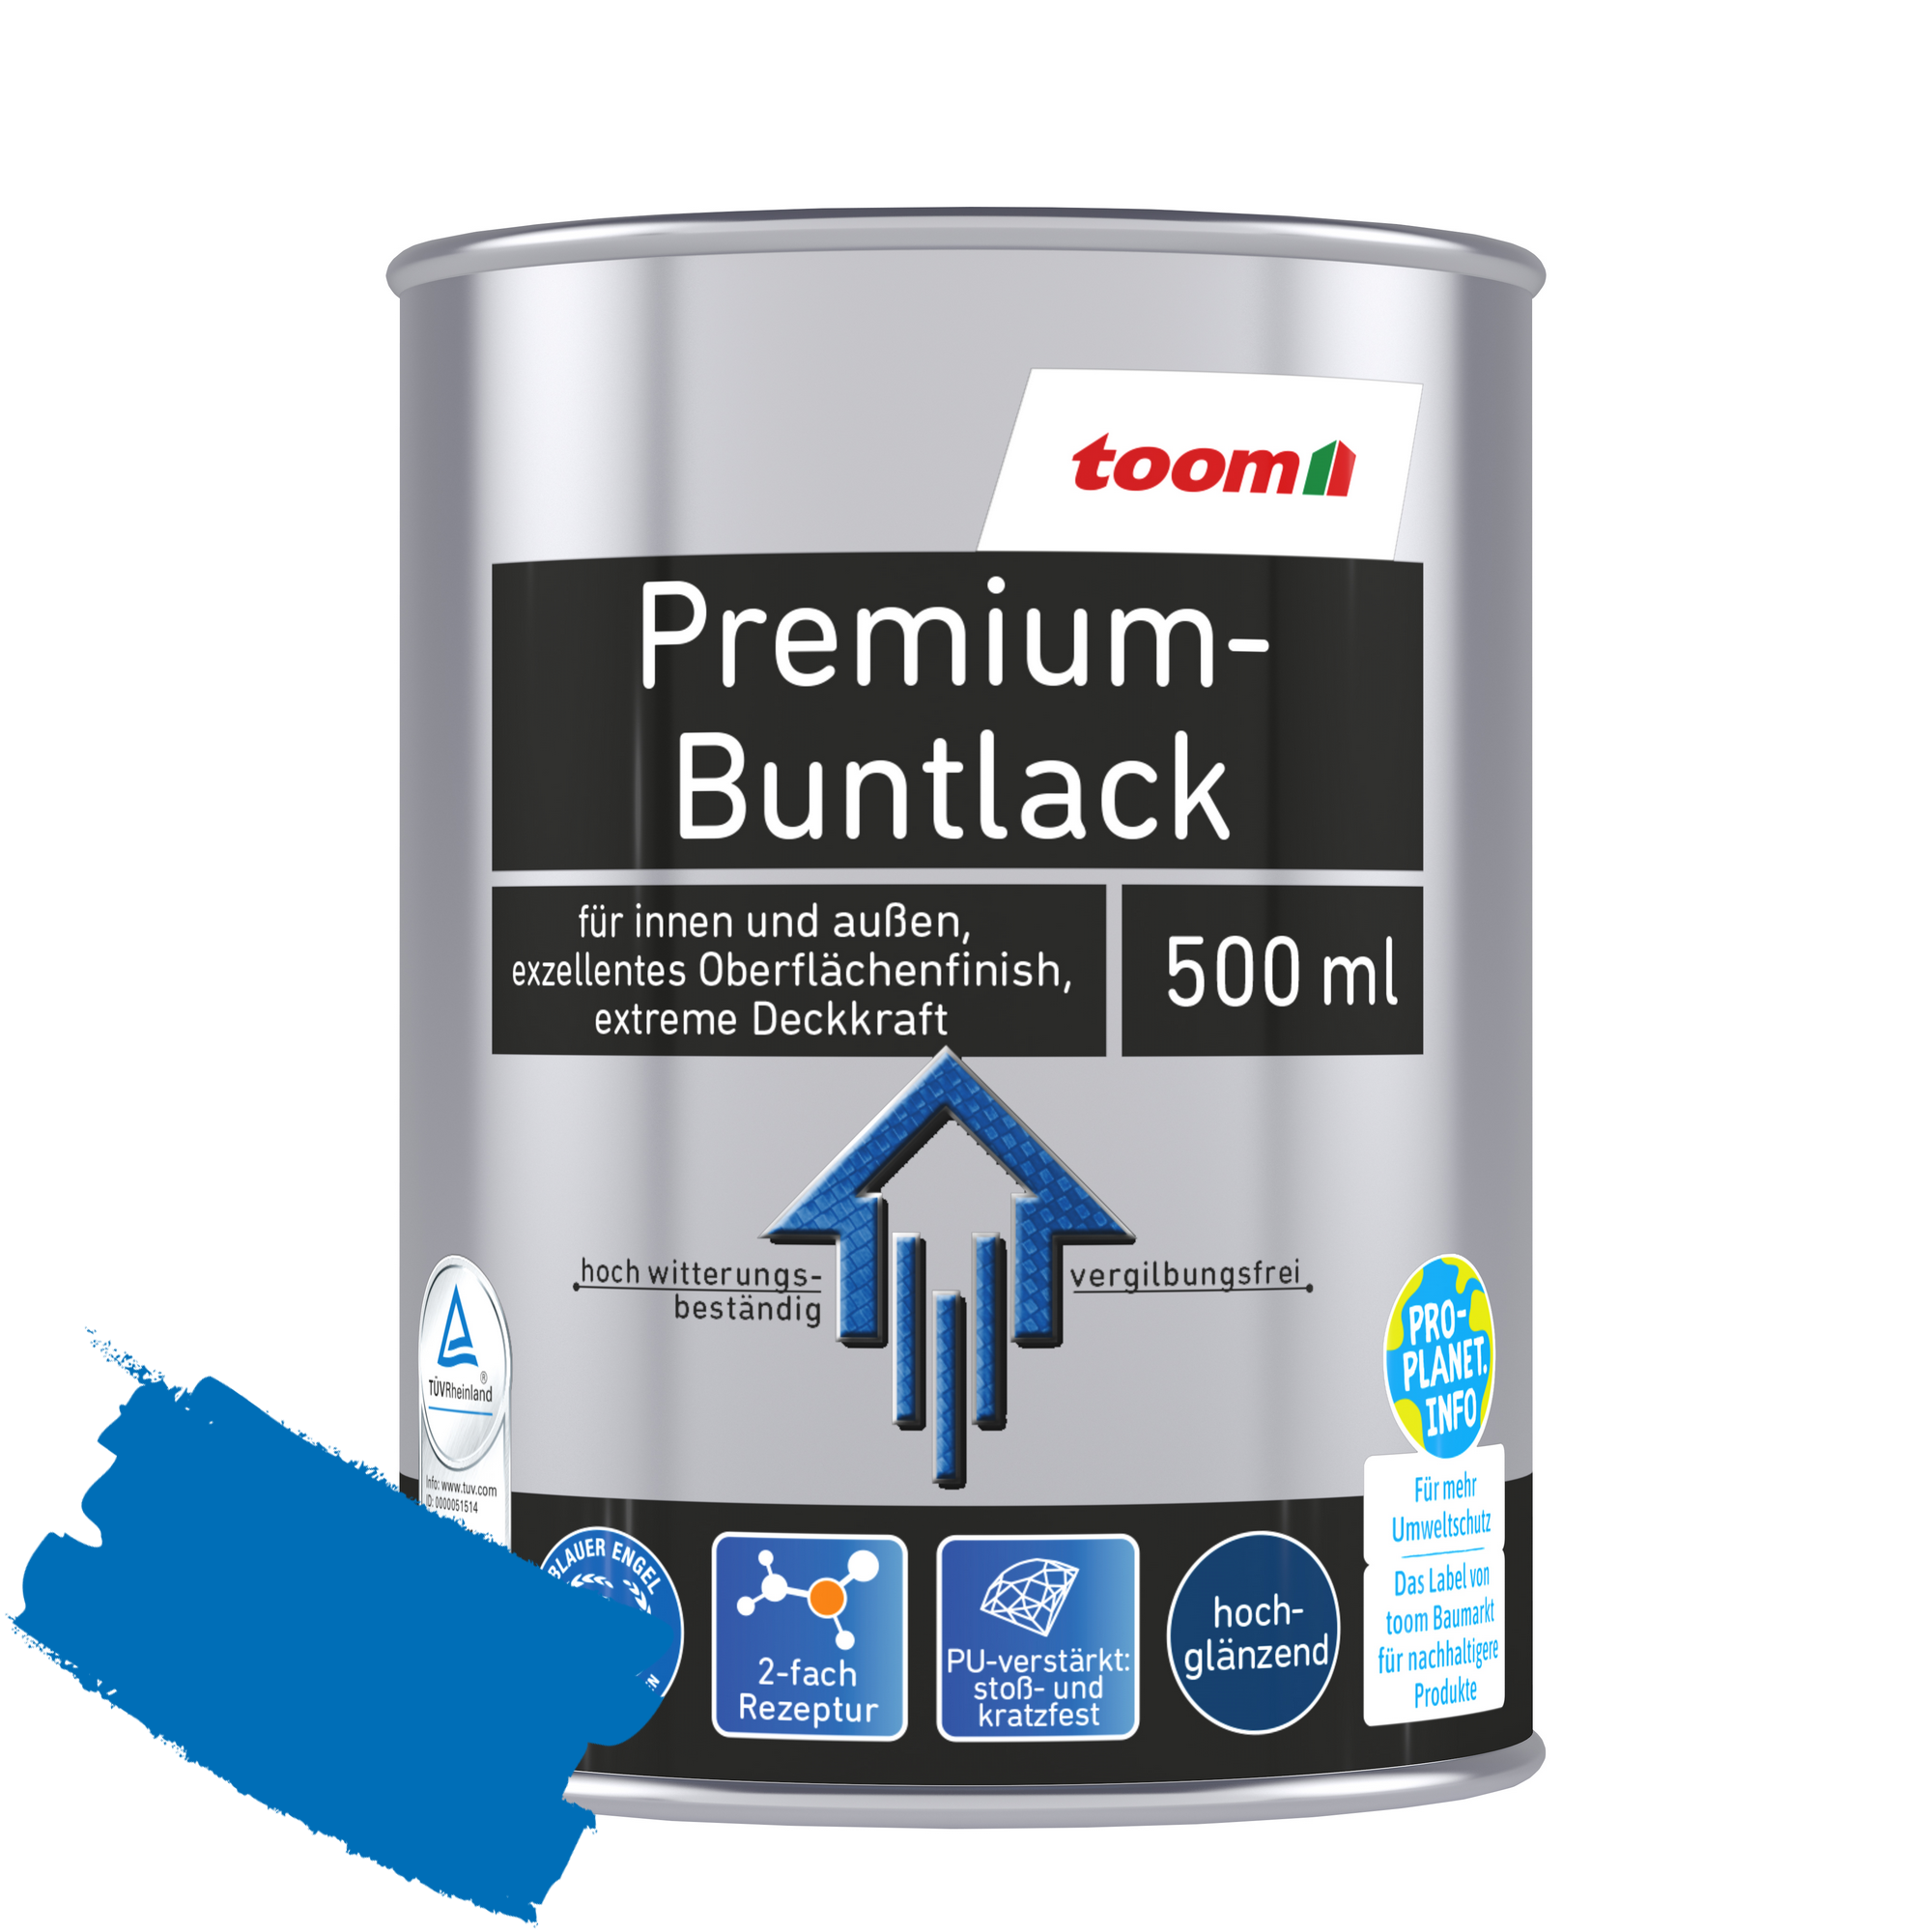 Premium-Buntlack pazifikblau glänzend 500 ml + product picture